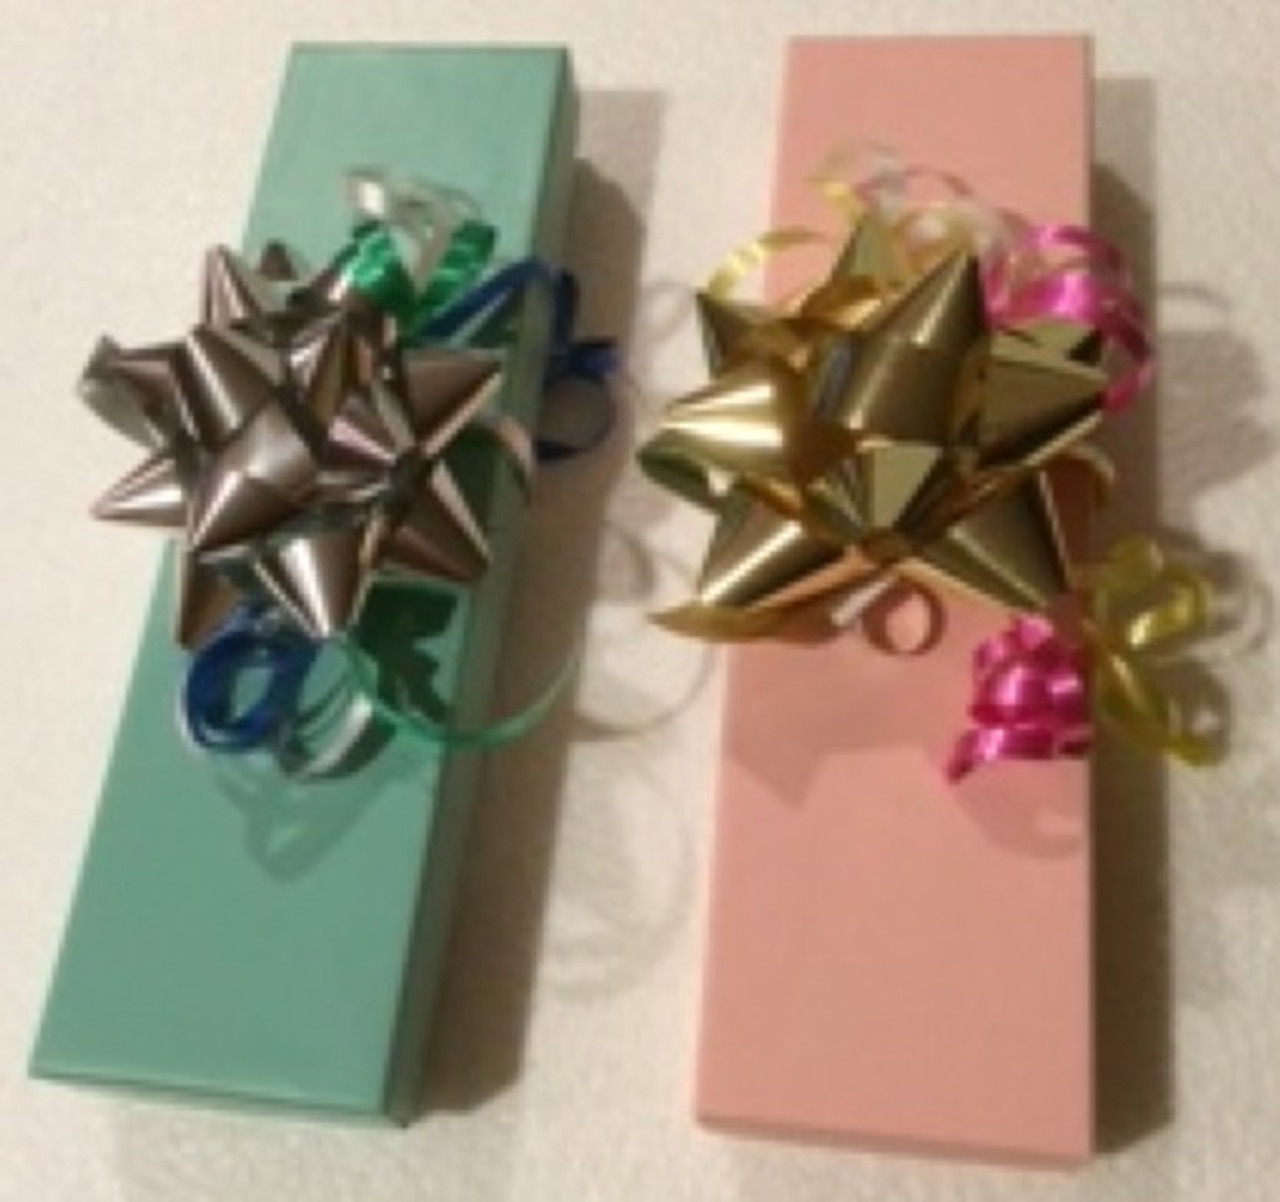 Buy personalized diwali gifts hamper indian diwali gift boxes navratri gift  box